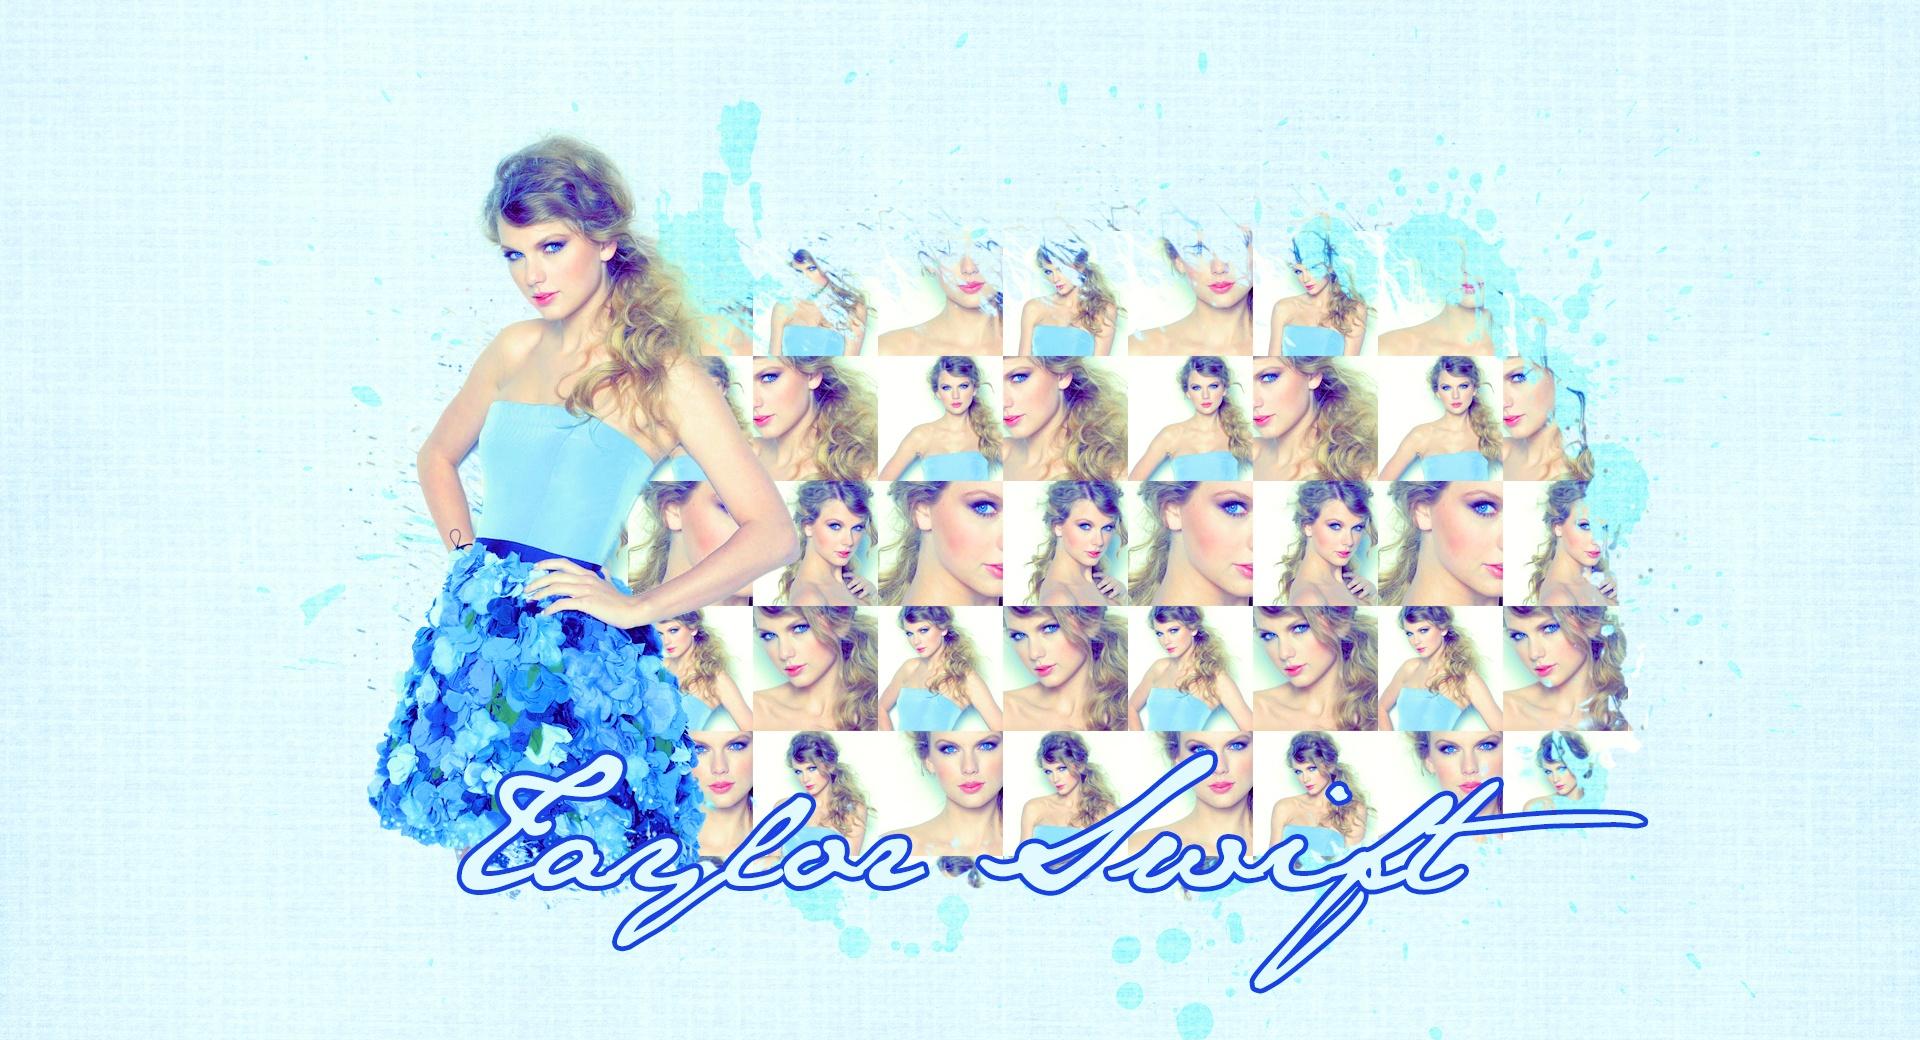 Taylor Swift Blue Dress at 1024 x 1024 iPad size wallpapers HD quality